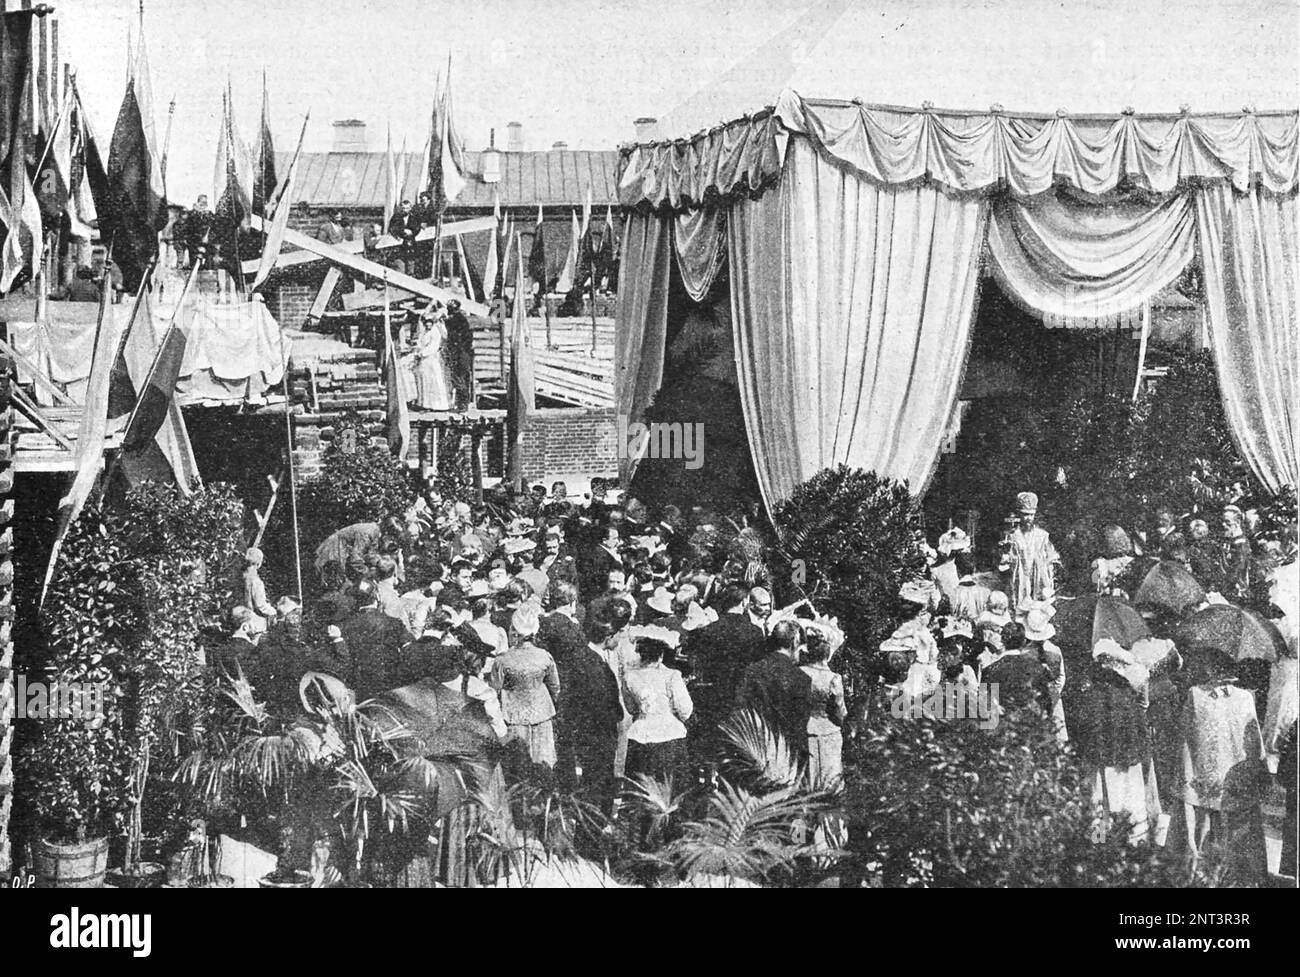 Posa cerimoniale della palestra Medvednikovskaya a Mosca. Foto dal 1902. Foto Stock